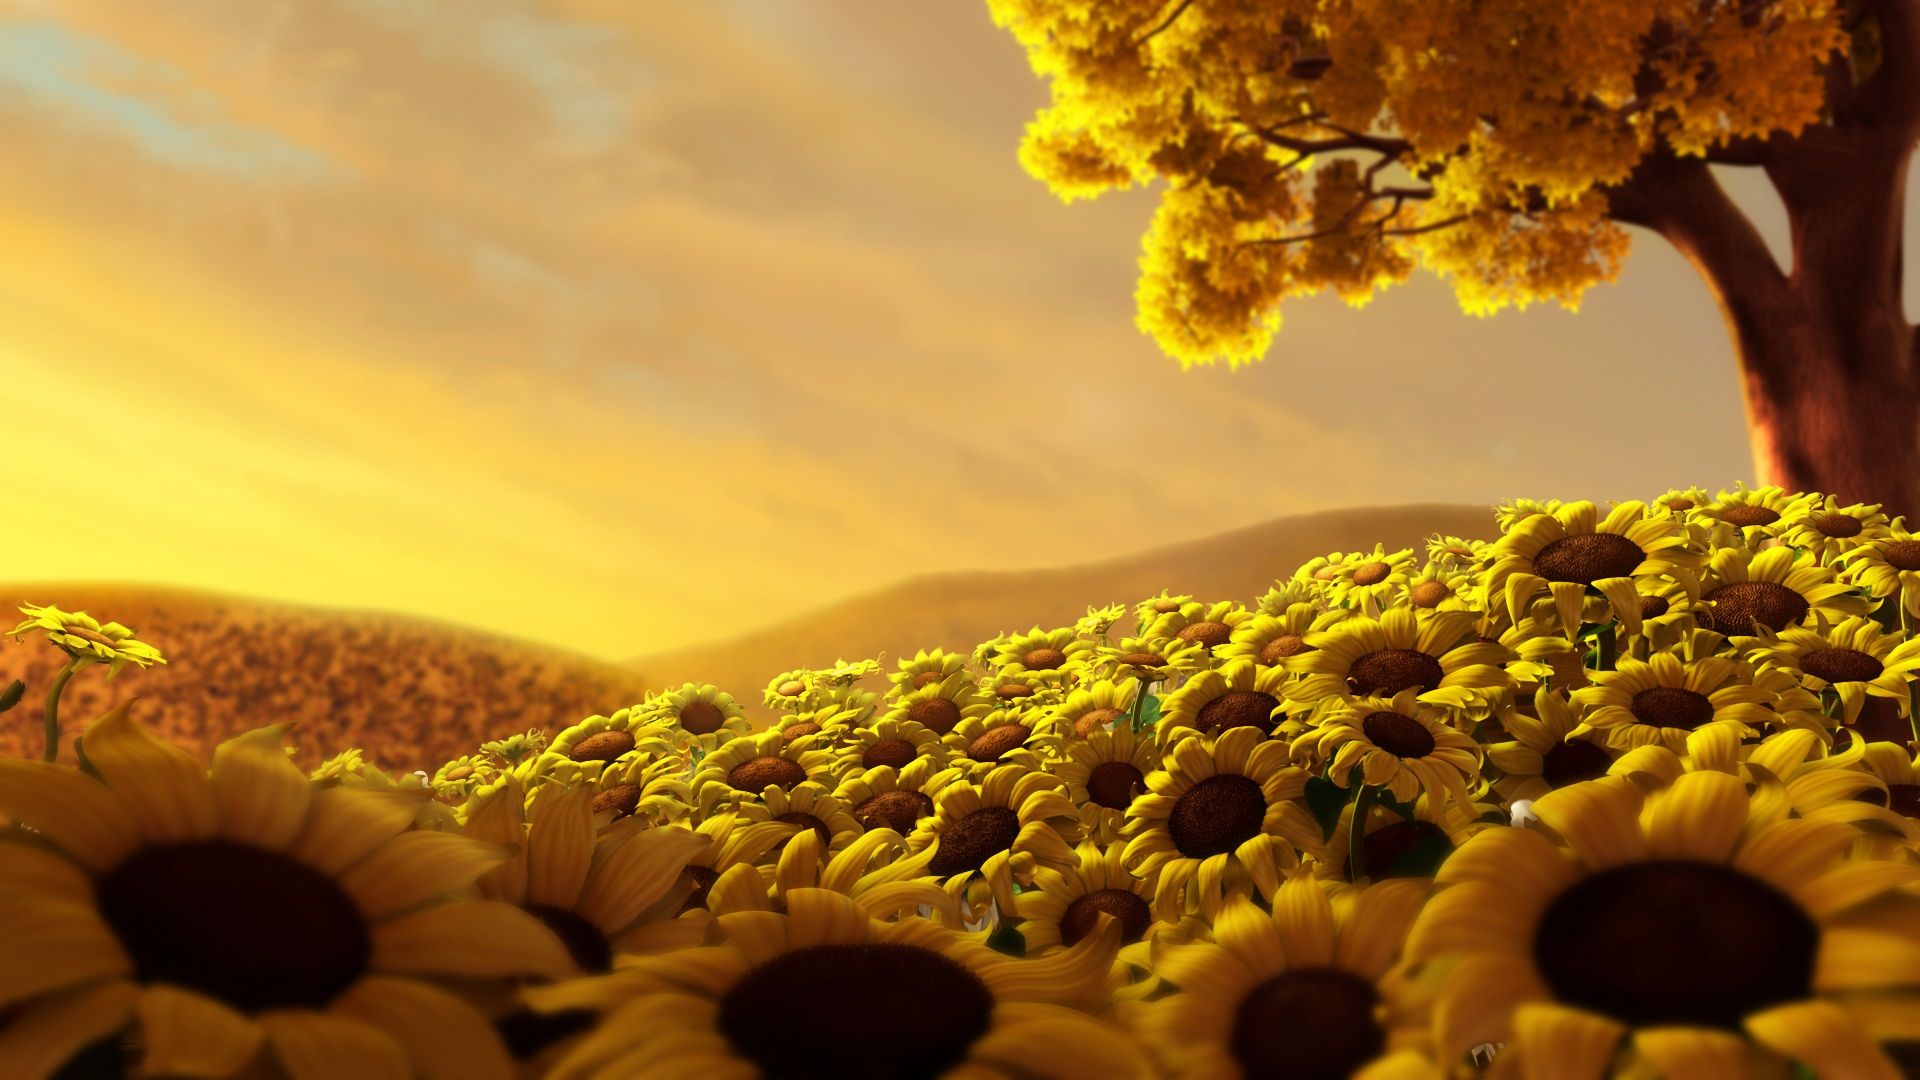 Sunflowers Field Wallpaper